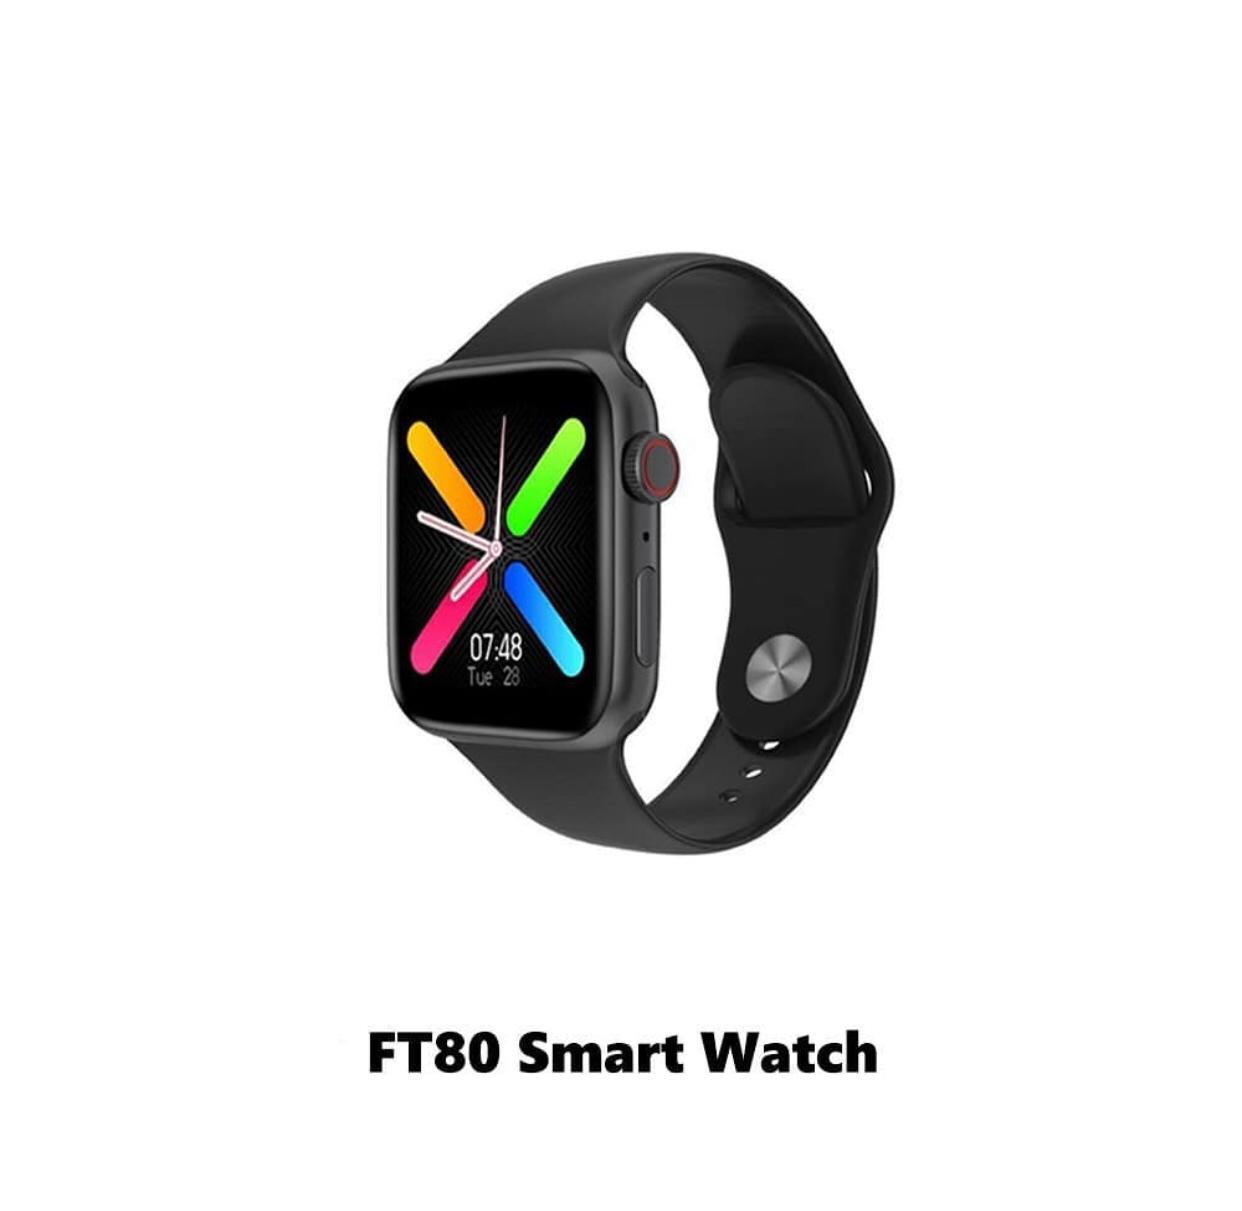 FT80 Smart Watch